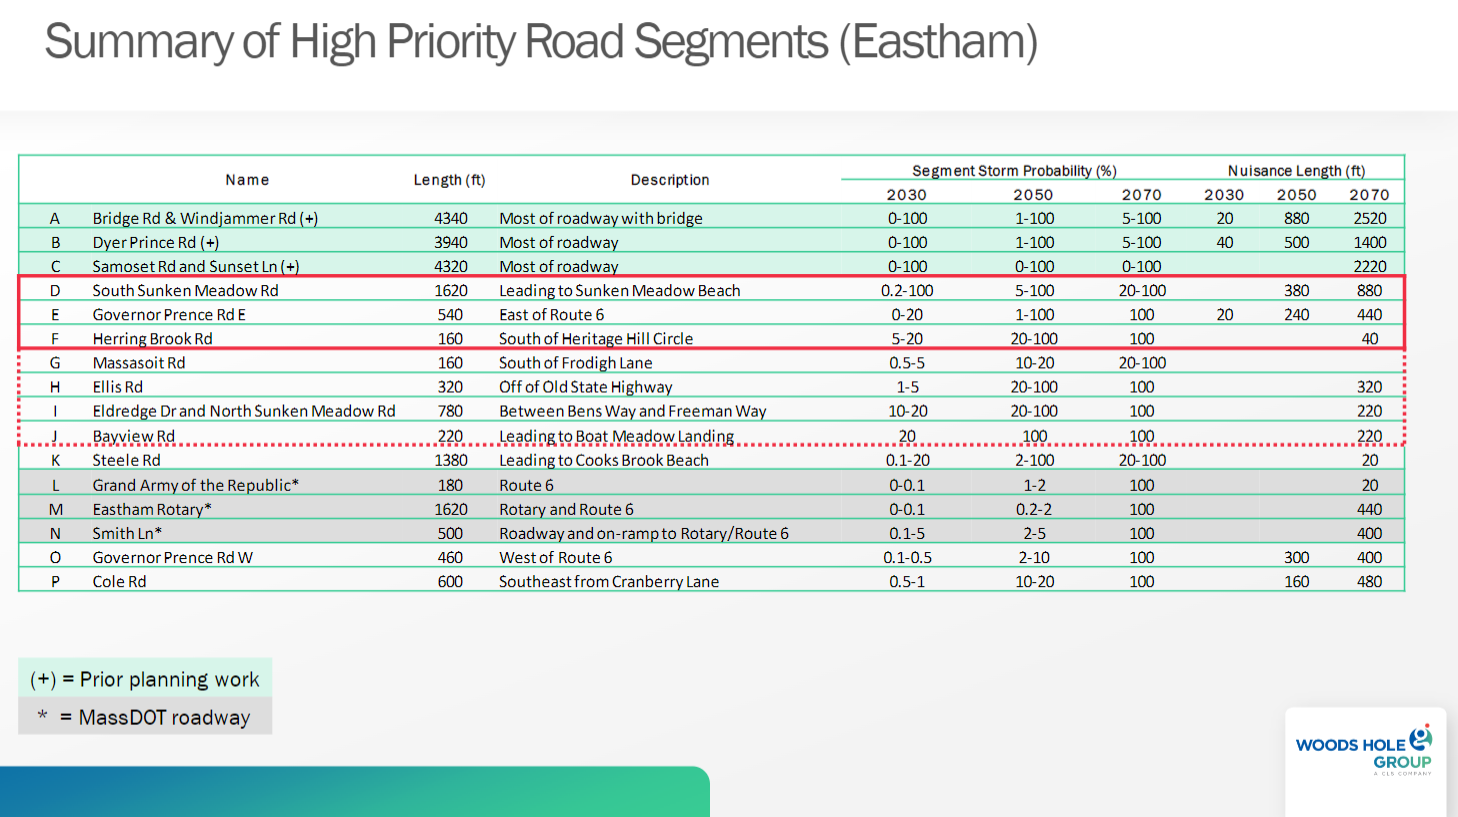 Eastham Low Lying Roads High Priority Segments